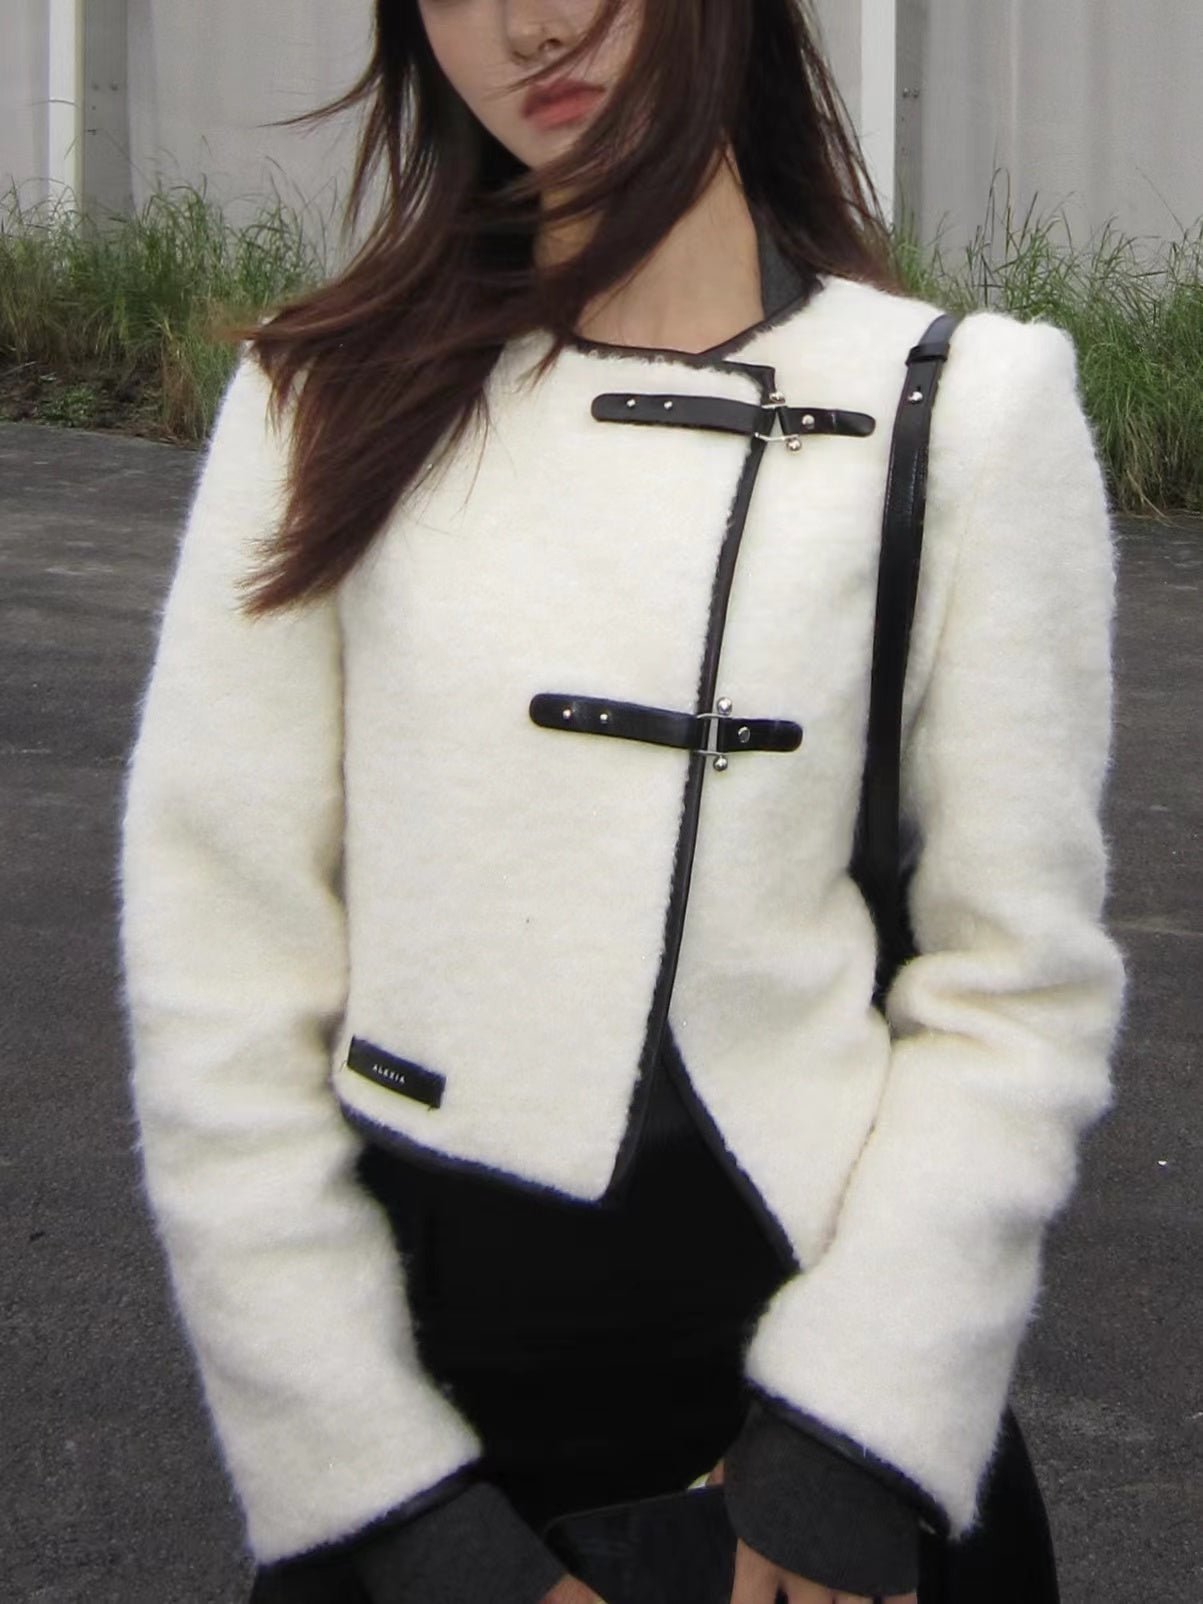 Alexia Sandra White Asymmetrical Lambswool Jacket | MADA IN CHINA